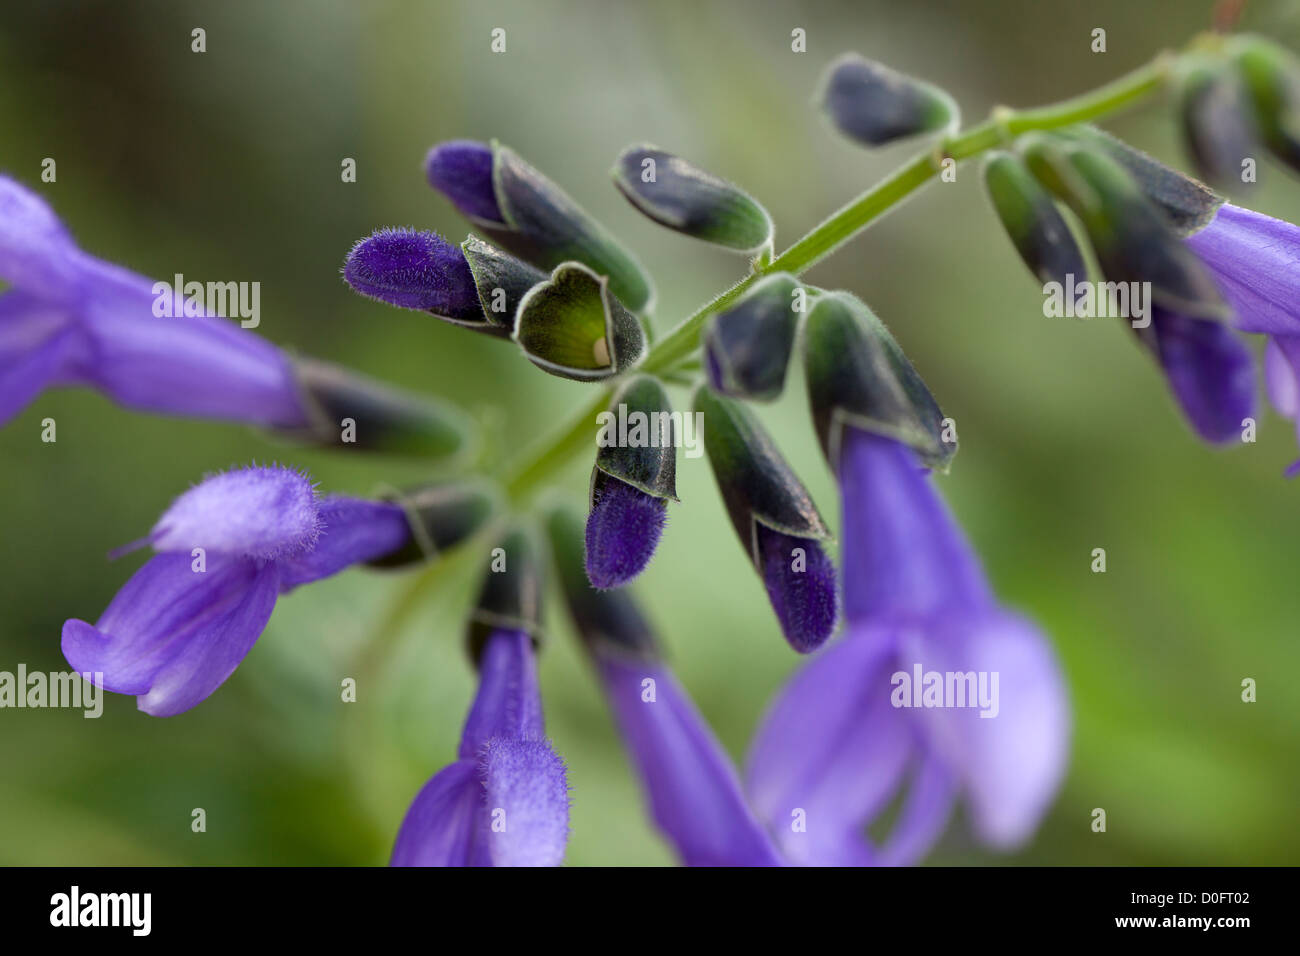 'Blue Ensign' Anise-scented sage, Paranasalvia (Salvia guaranitica) Stock Photo